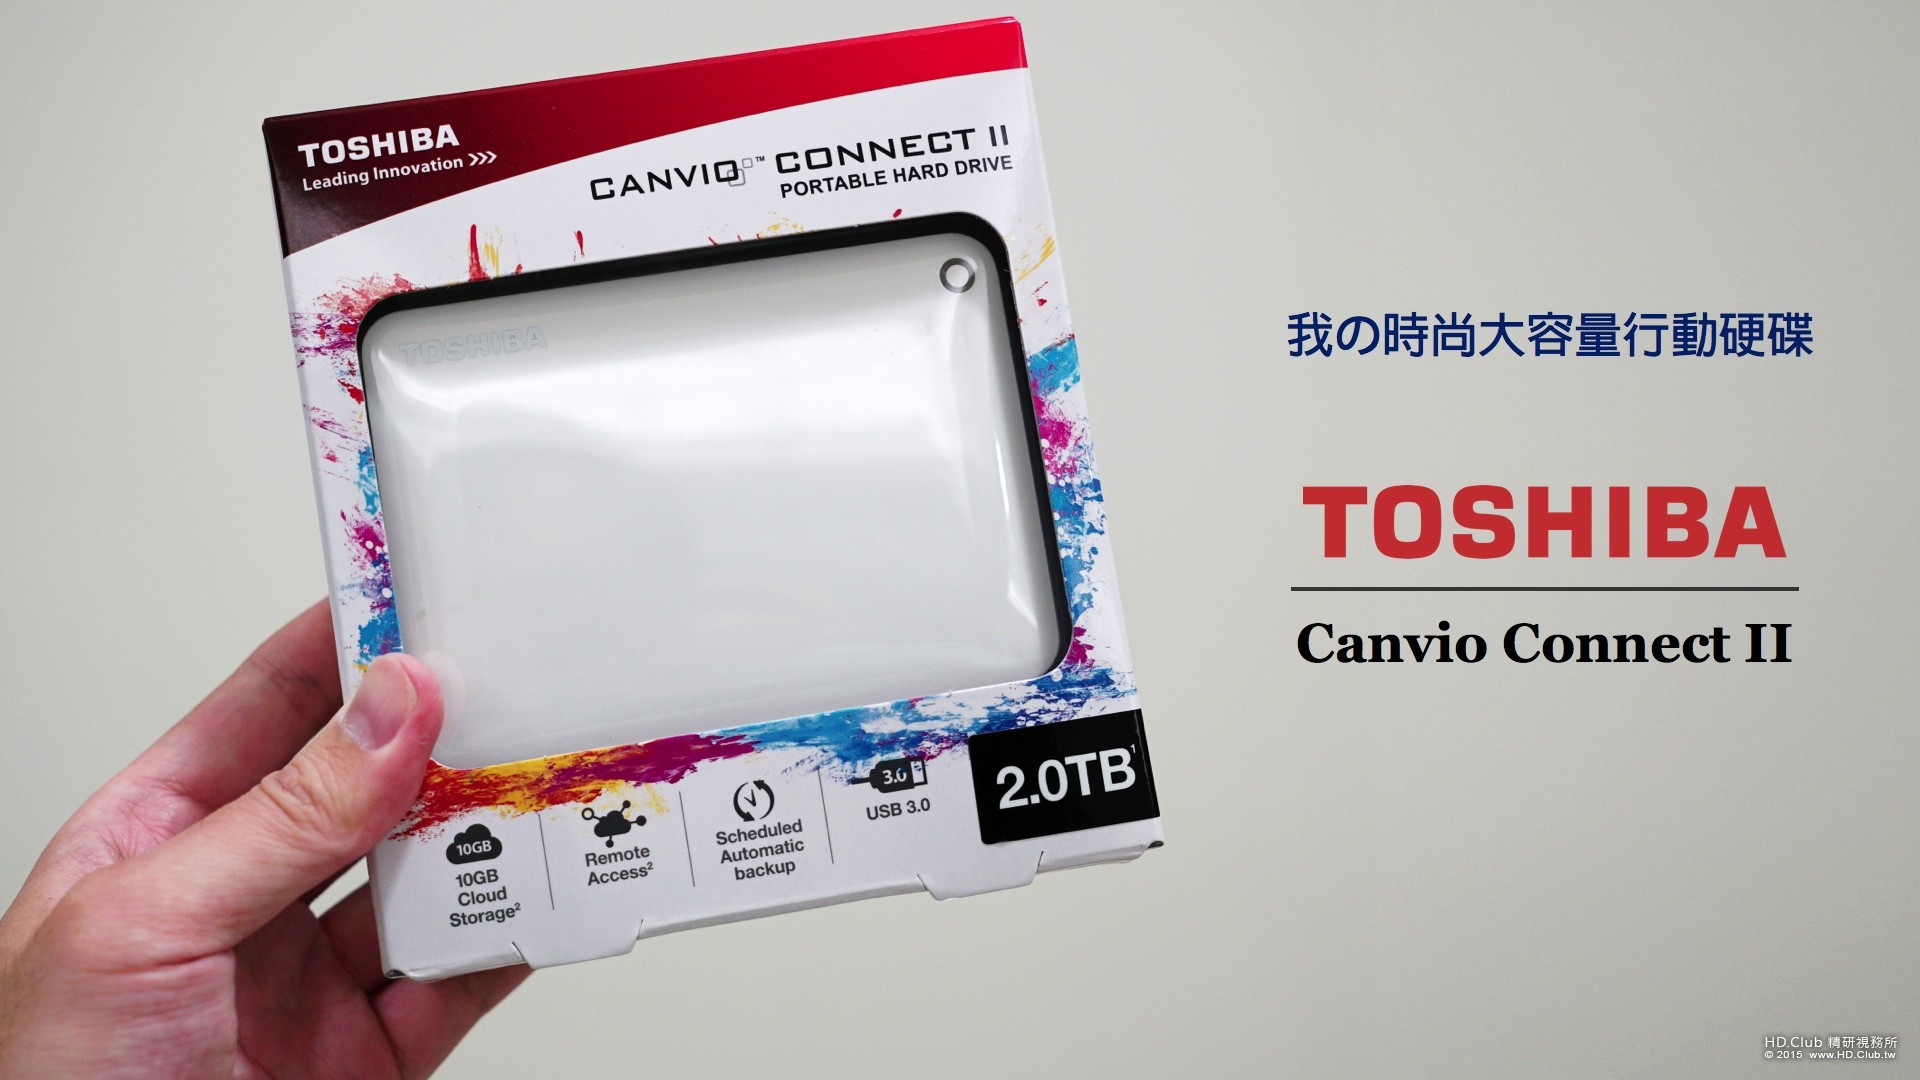 TOSHIBA Canvio Connect II